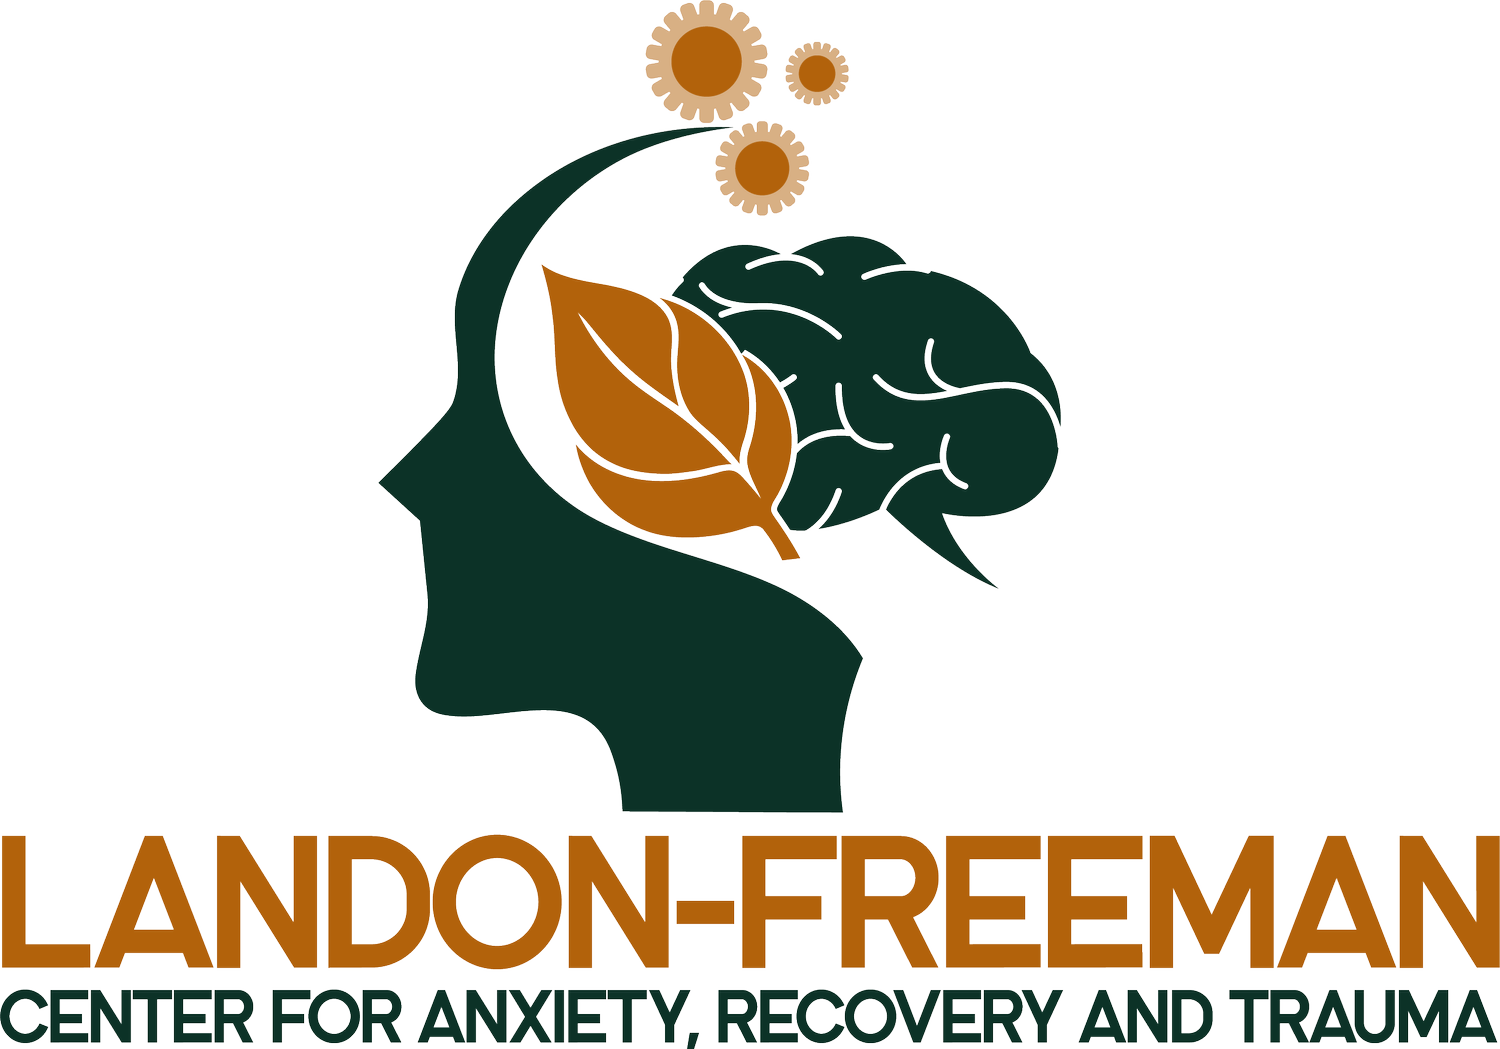 Landon-Freeman Center for Anxiety, Recovery &amp; Trauma